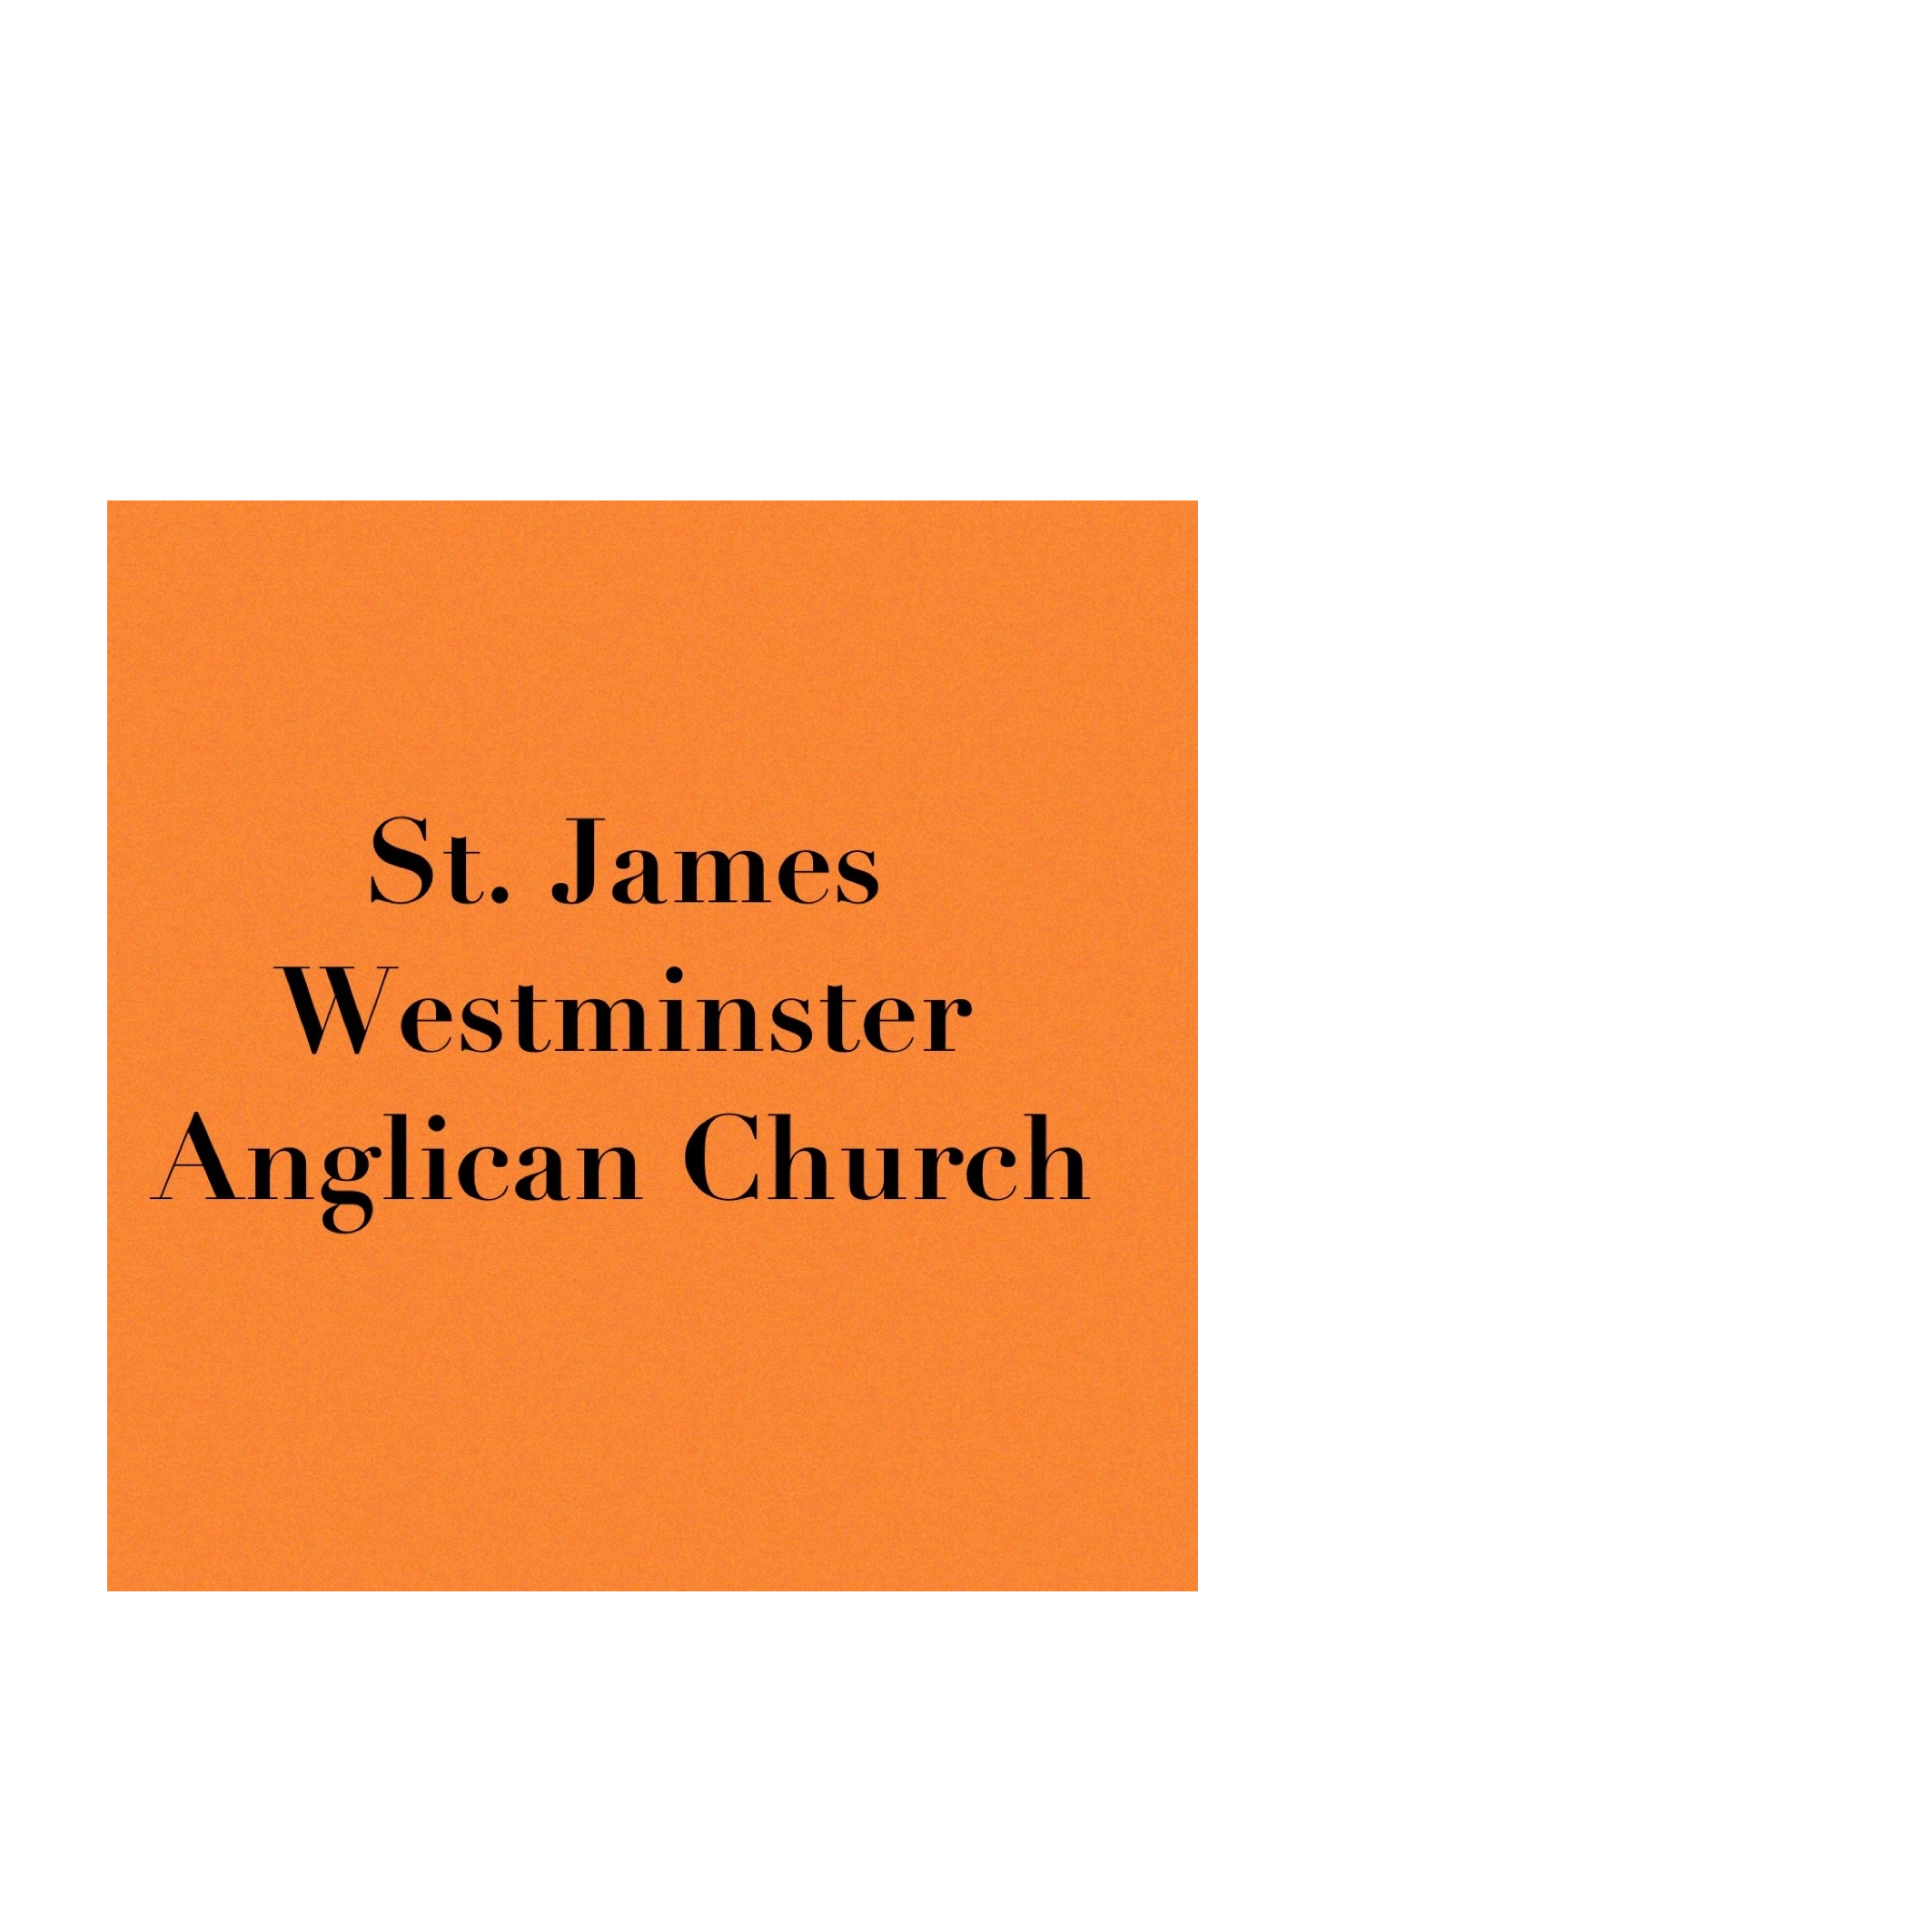 Saint James Westminster